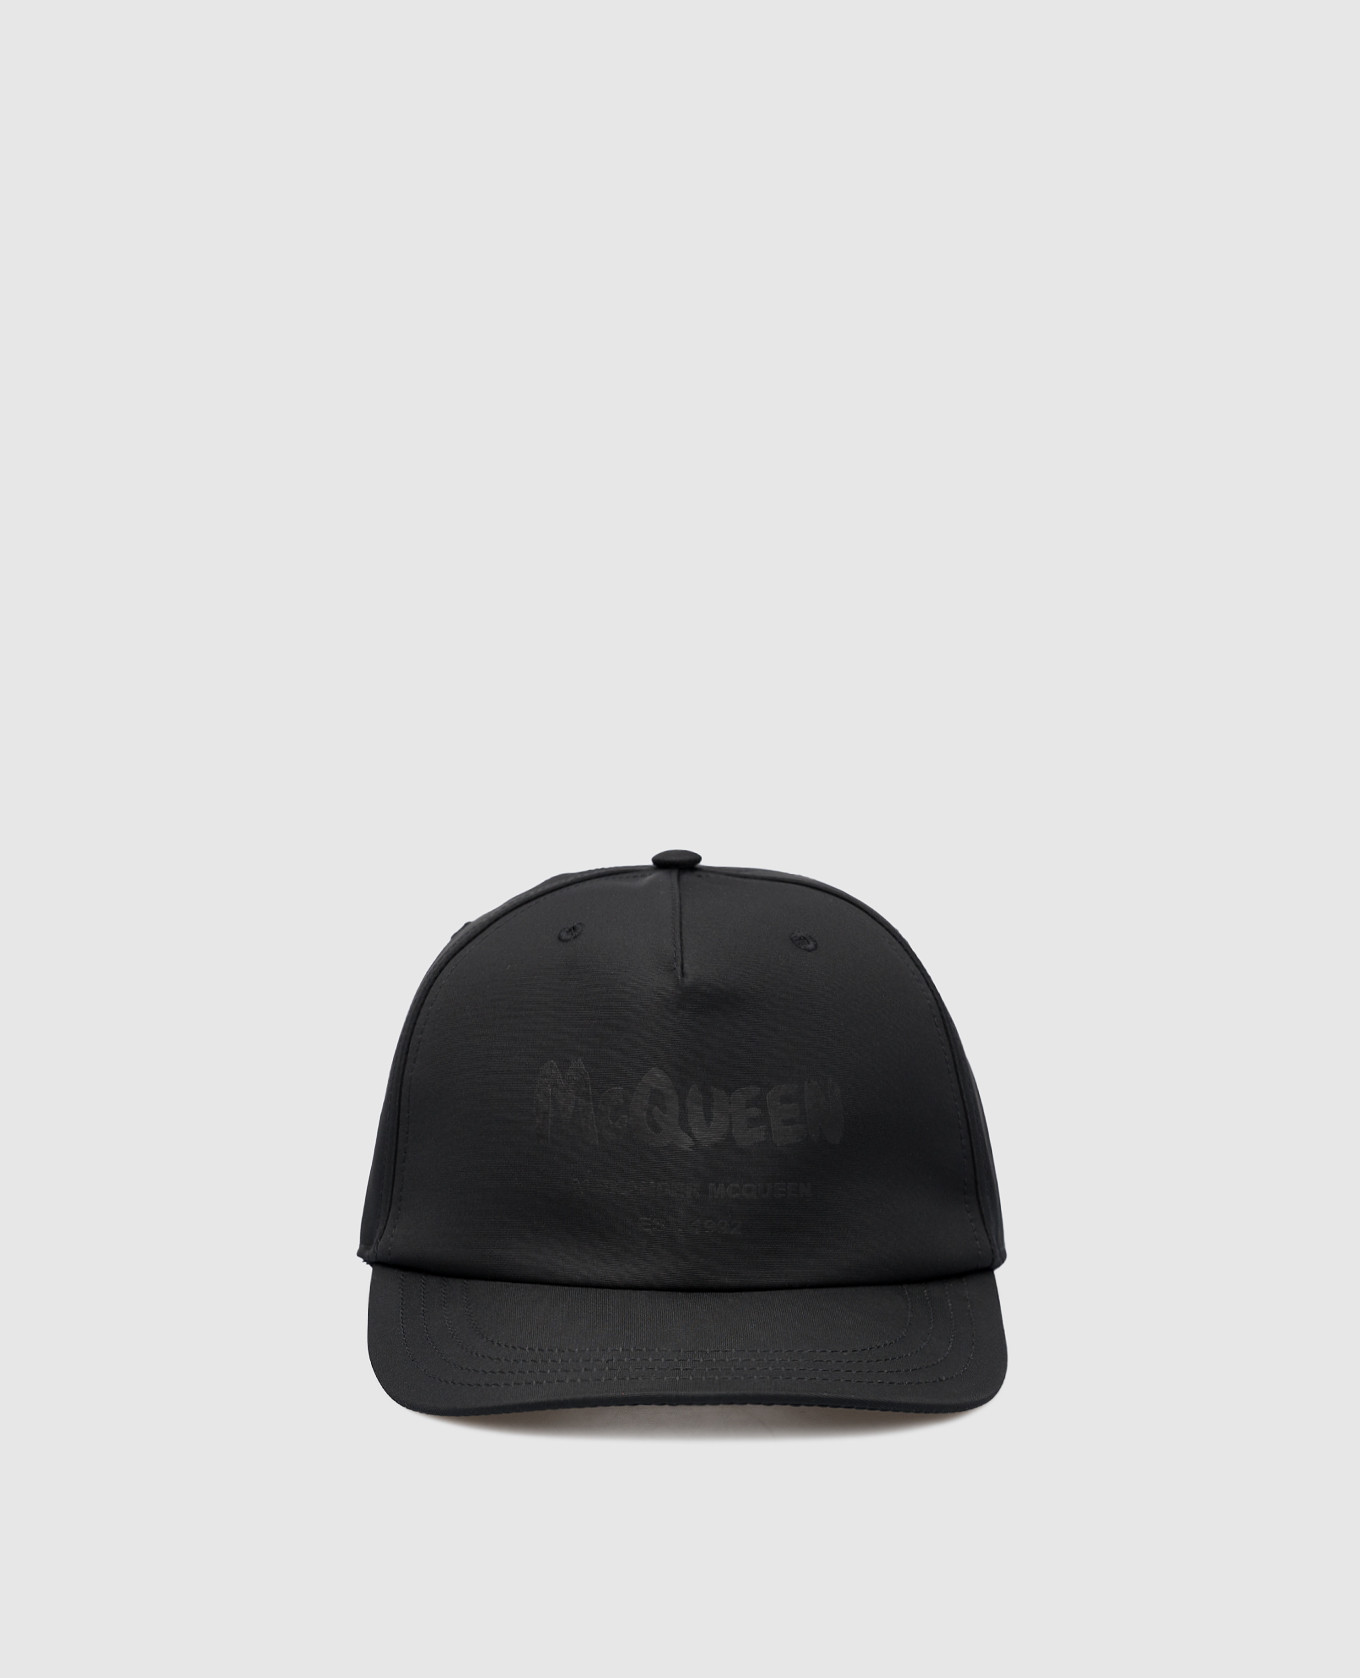 Black cap with McQueen Graffiti print